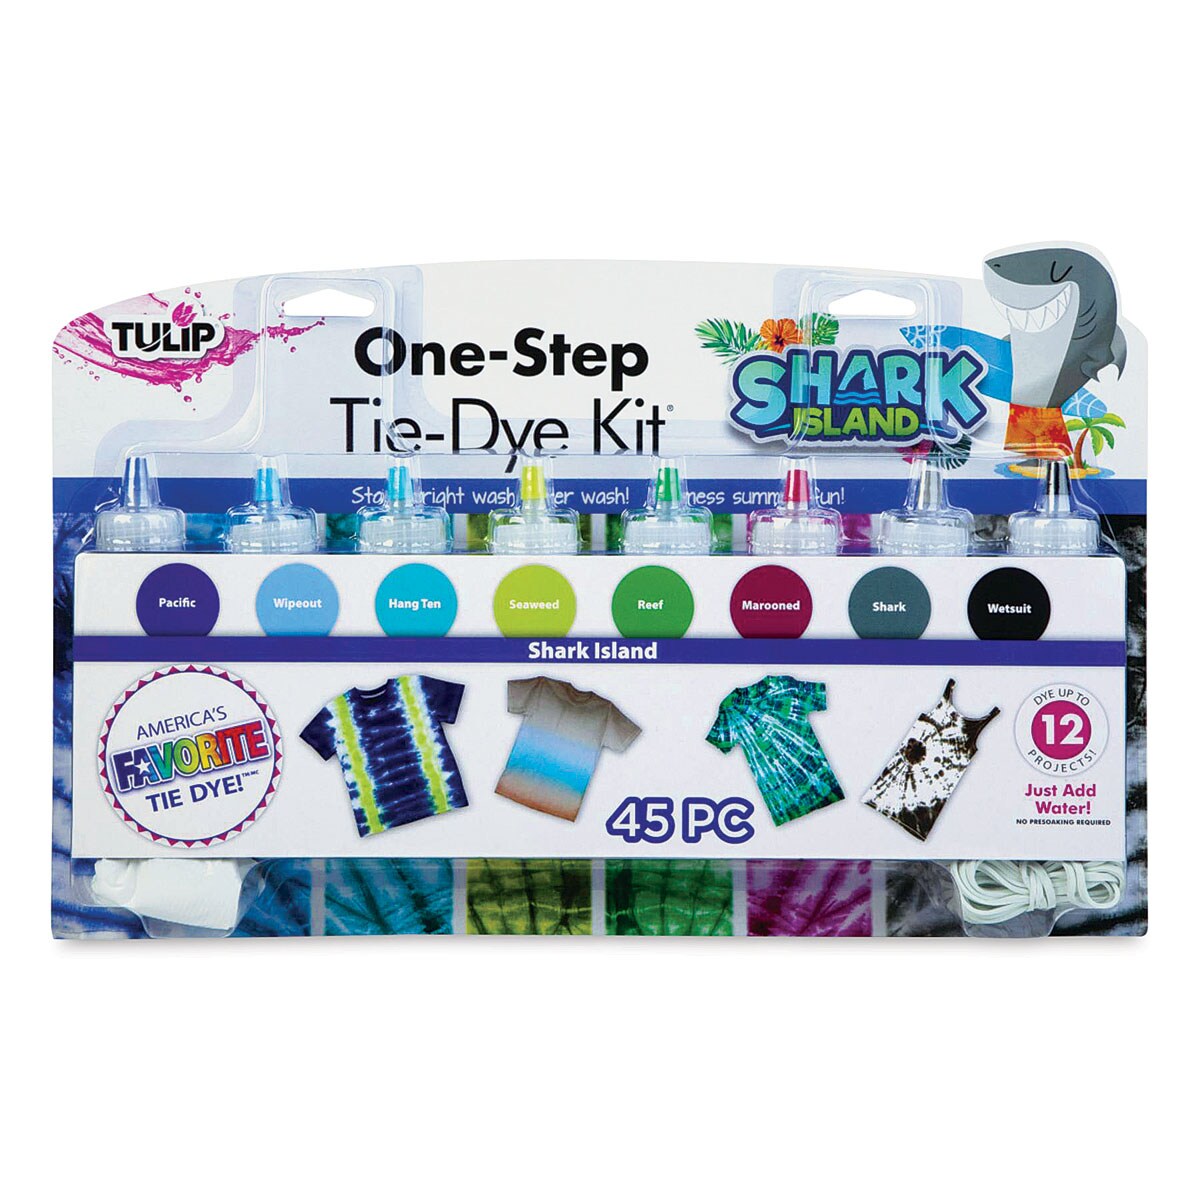 Tulip One-Step Tie-Dye Kit - Shark Island, Kit of 8 Colors